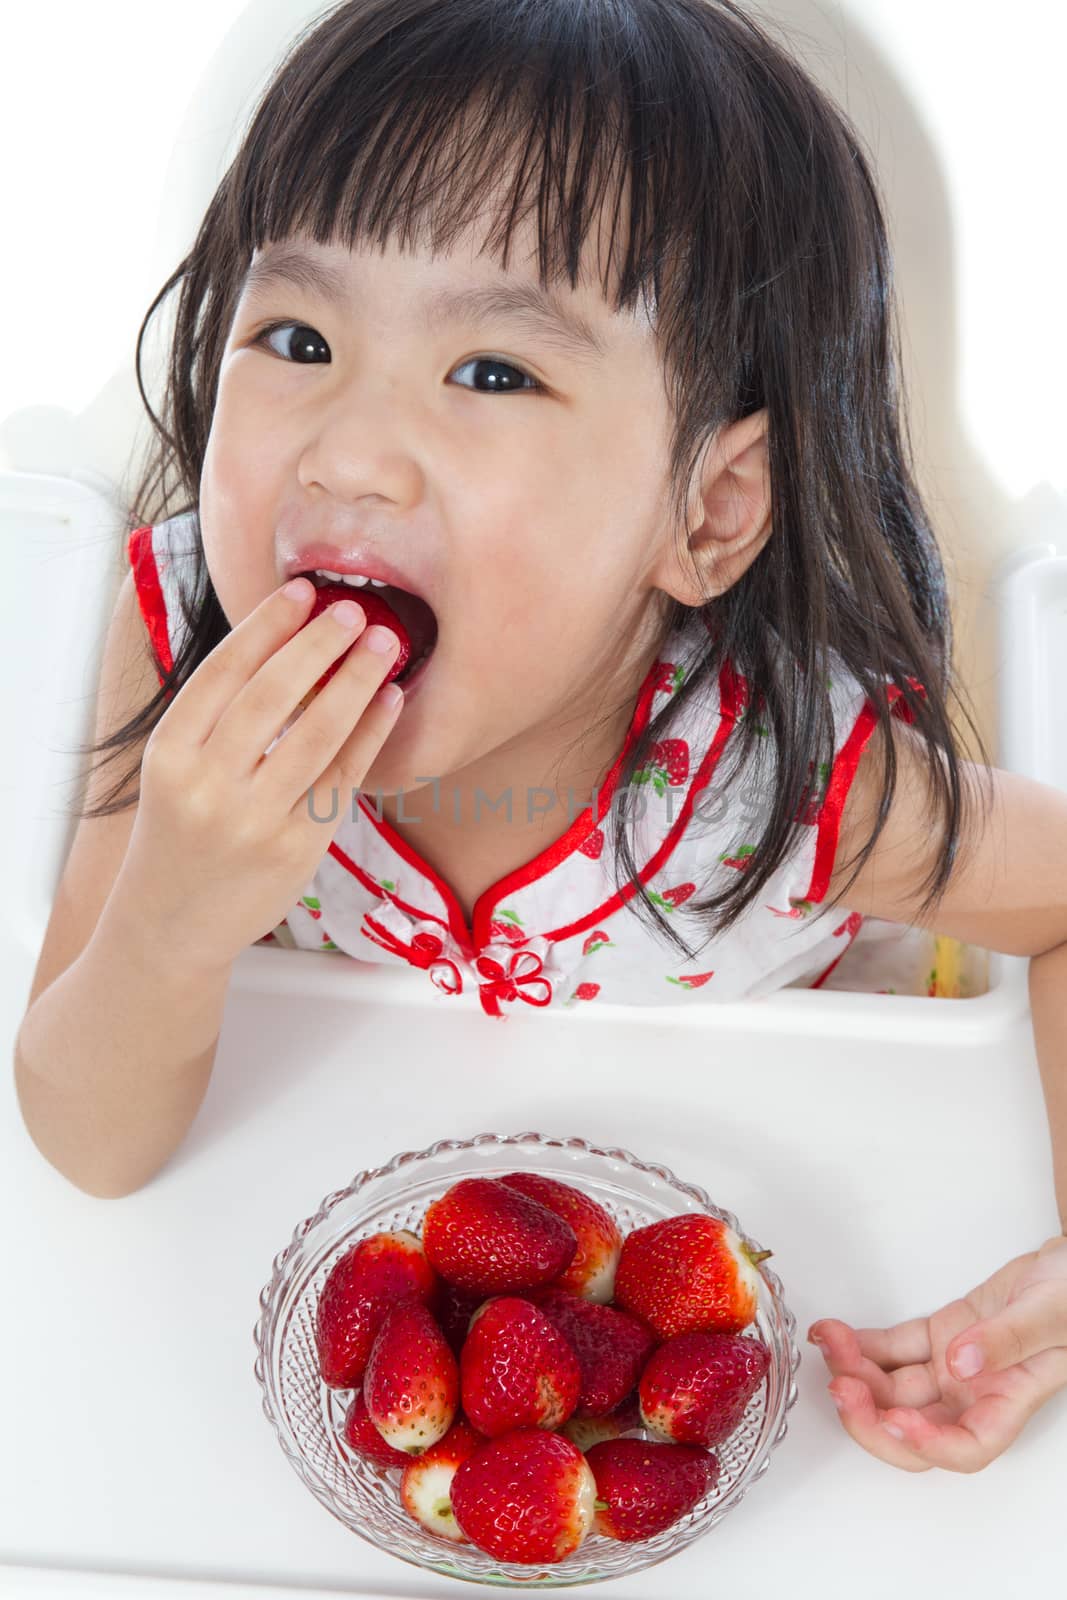 Asian Chinese children eating strawberries in plain white background.